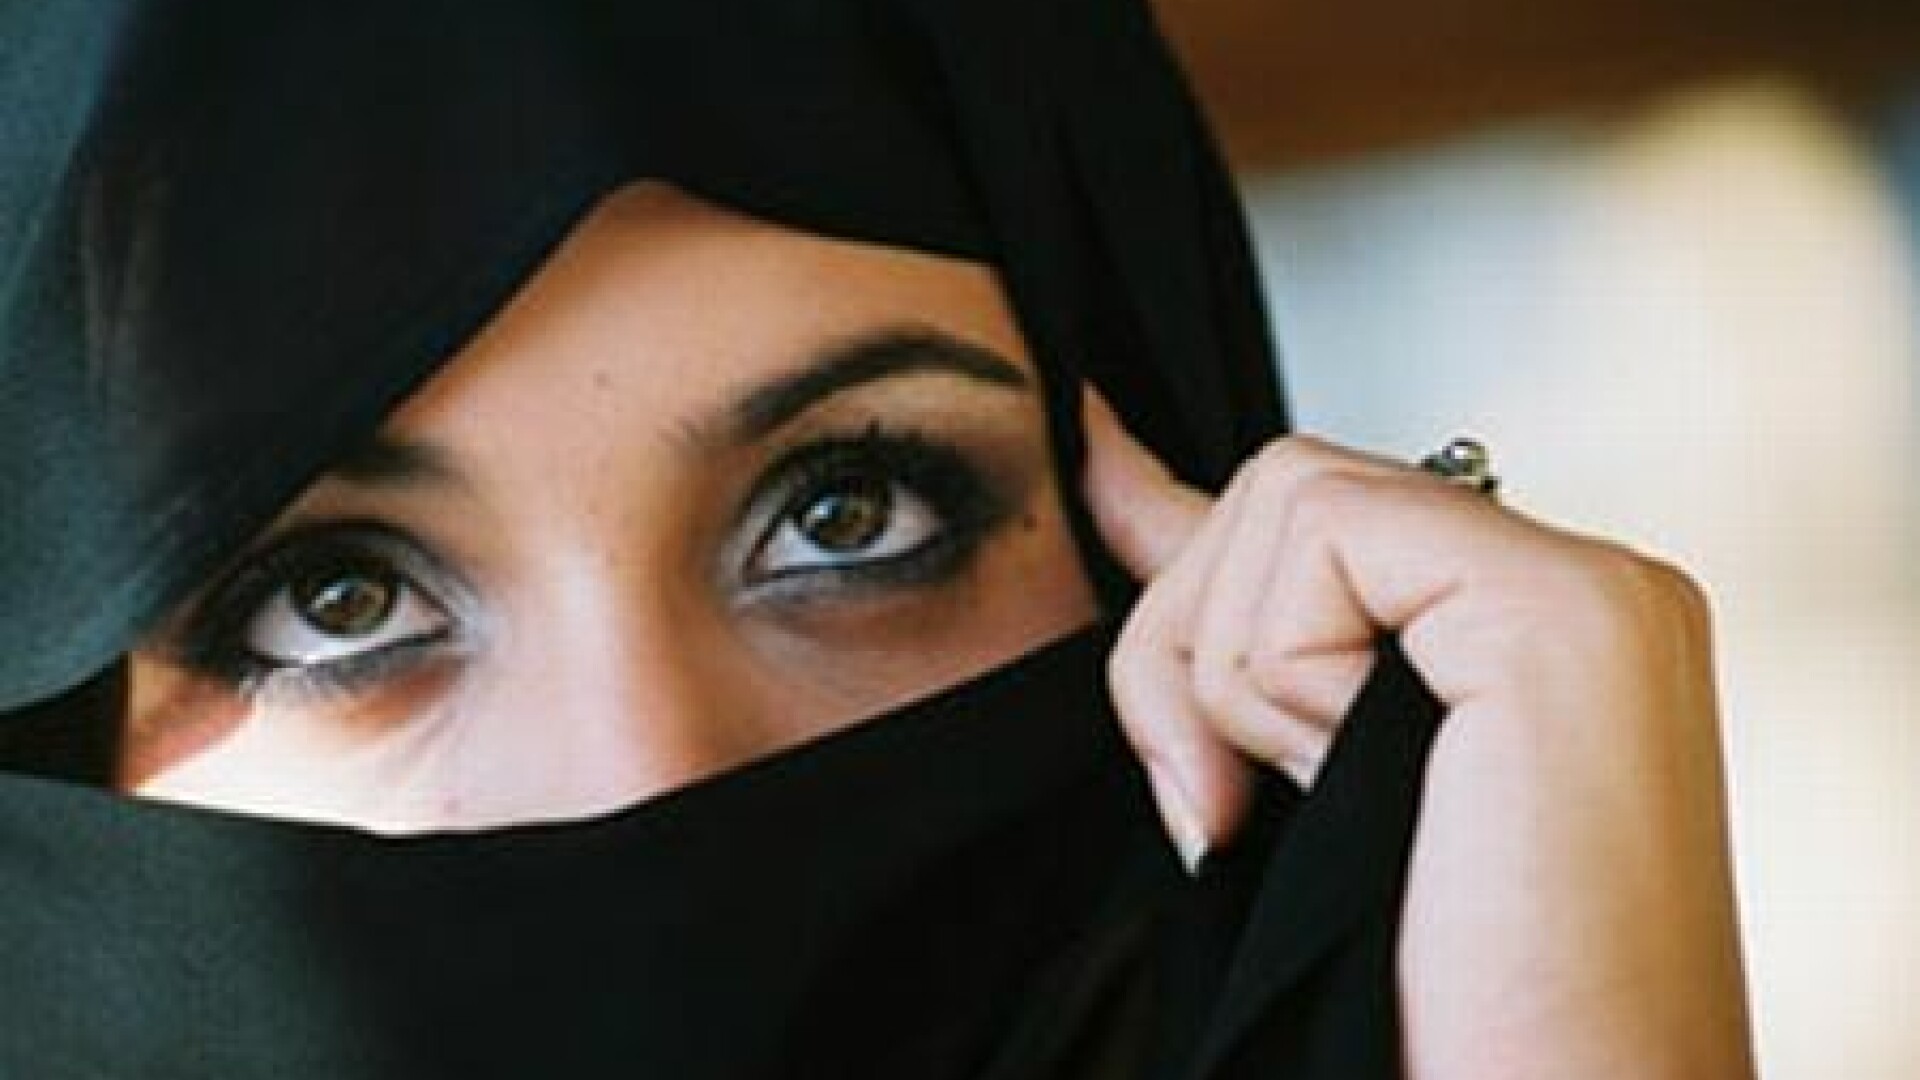 femeie musulmana